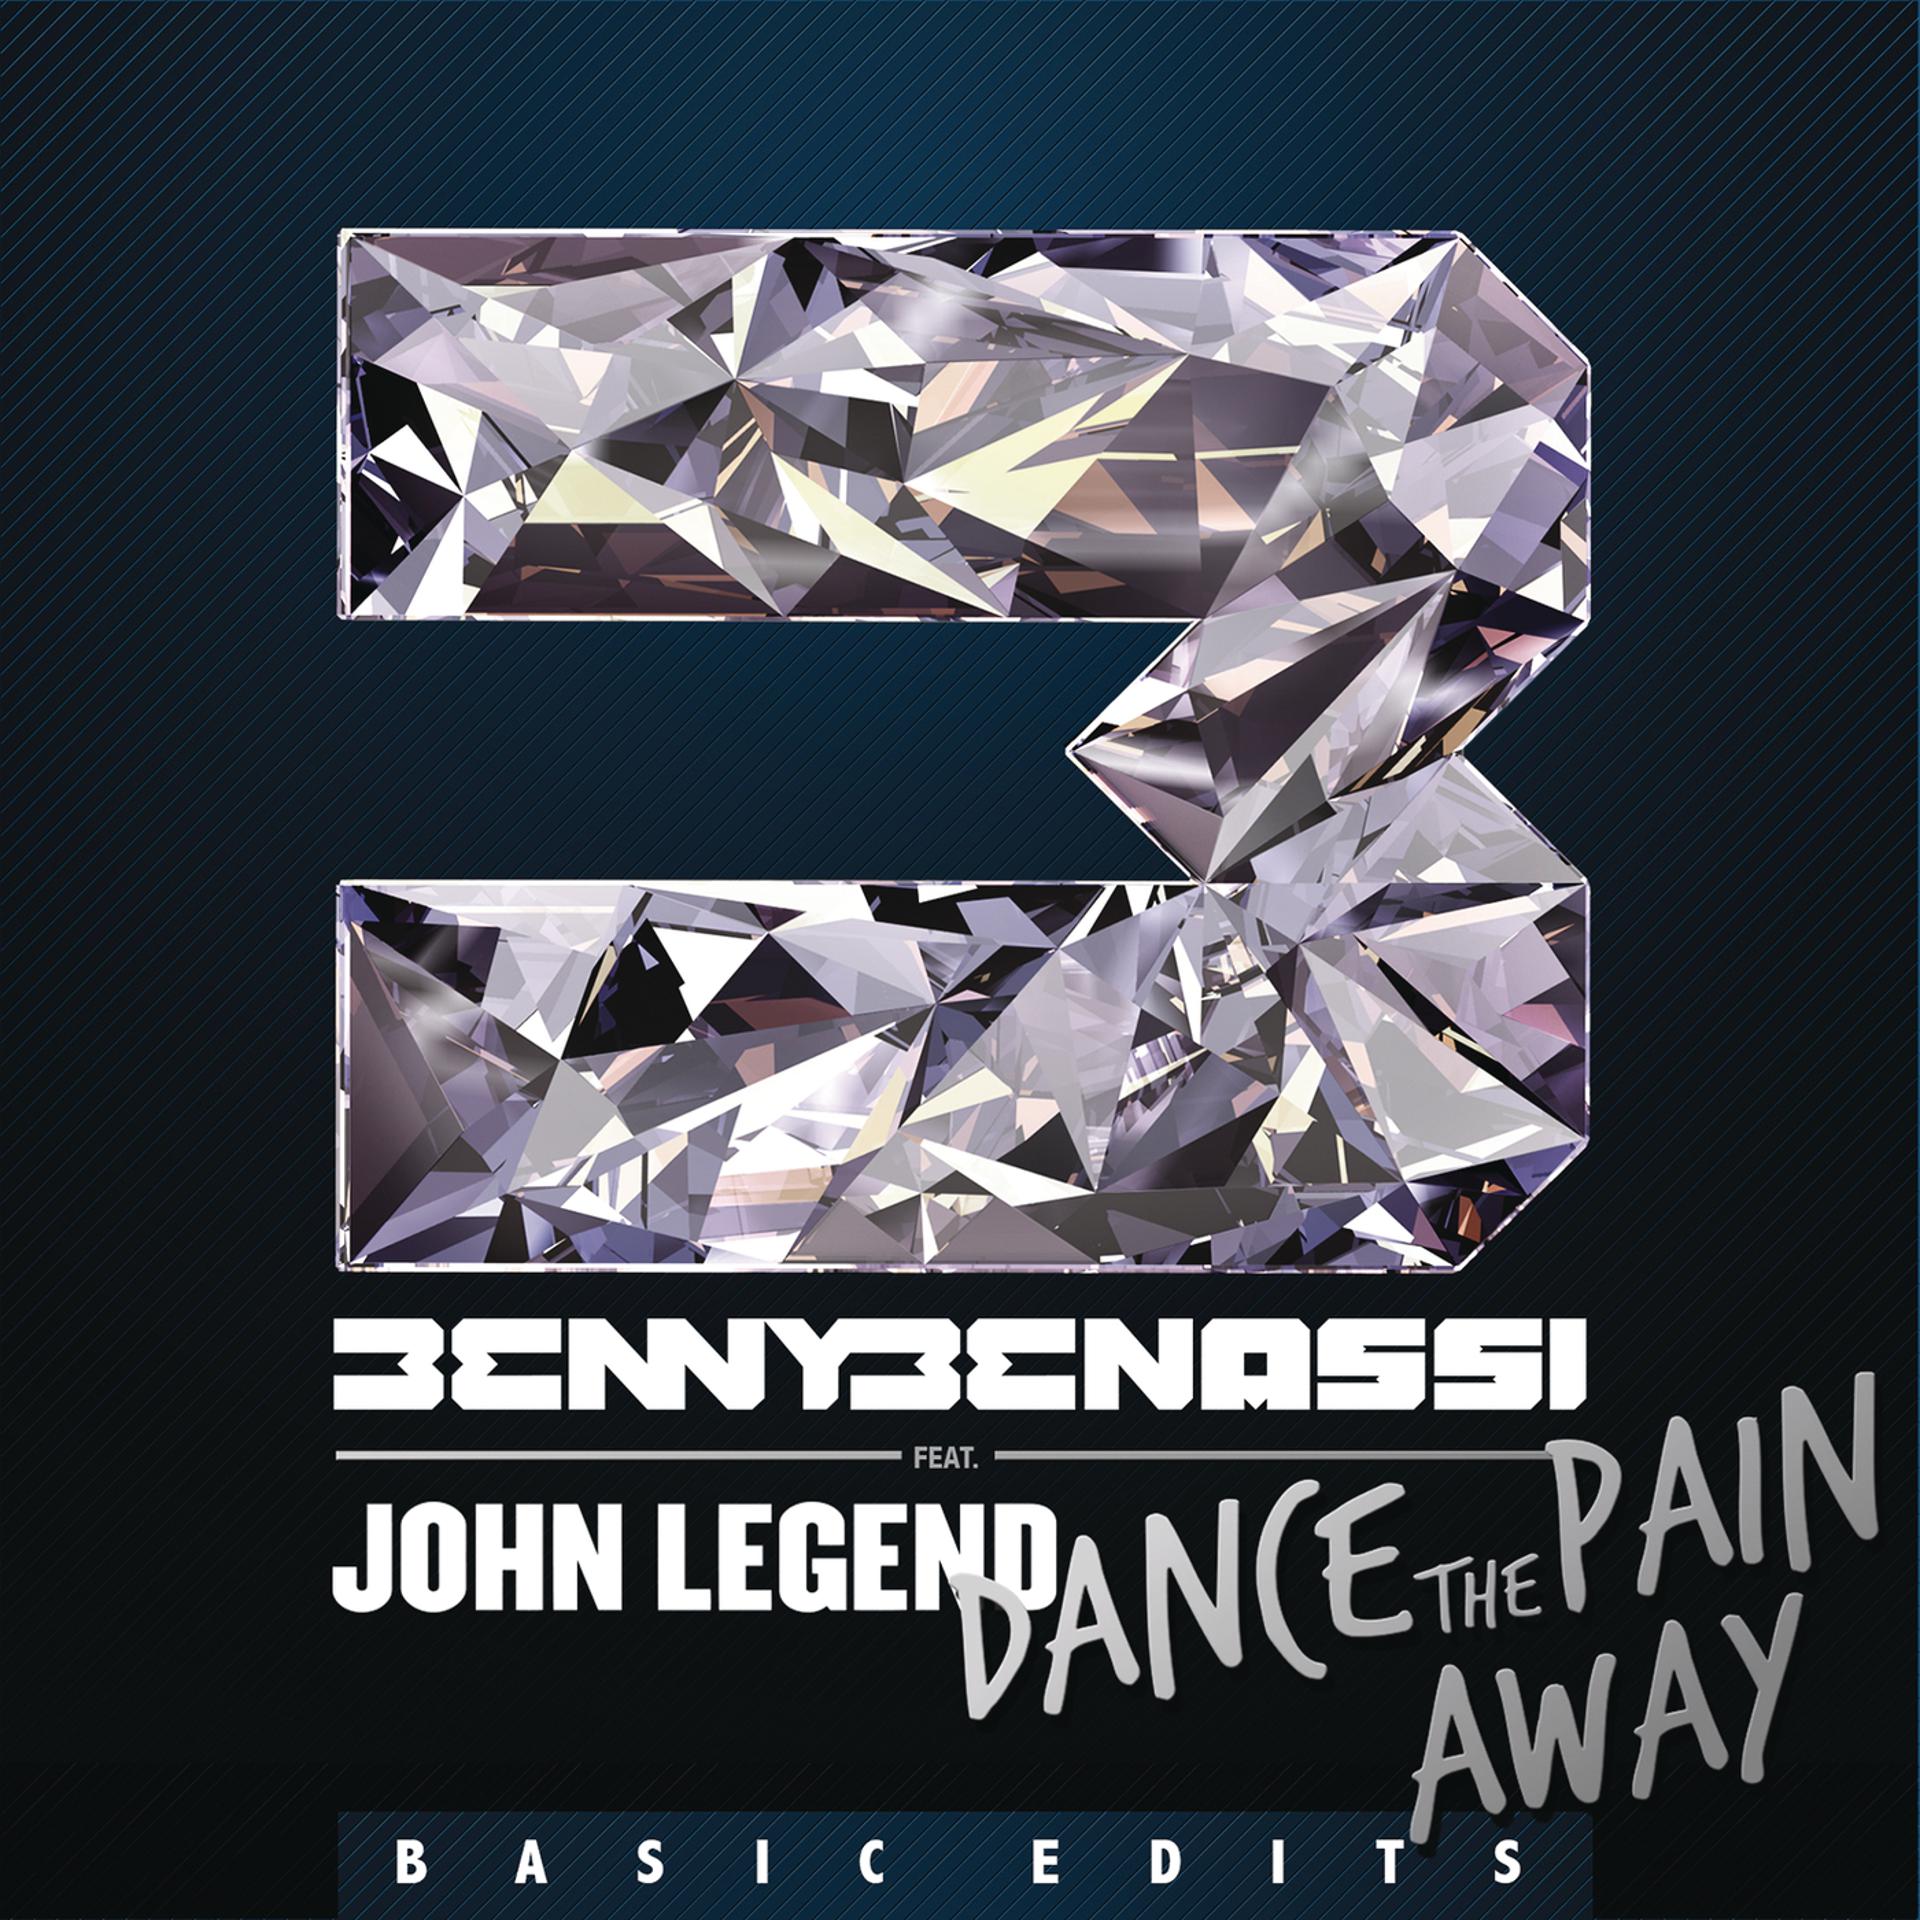 Benny Benassi feat. John Legend Dance the Pain away. Benny Benassi never win. Benny Benassi альбомы. Pain away.